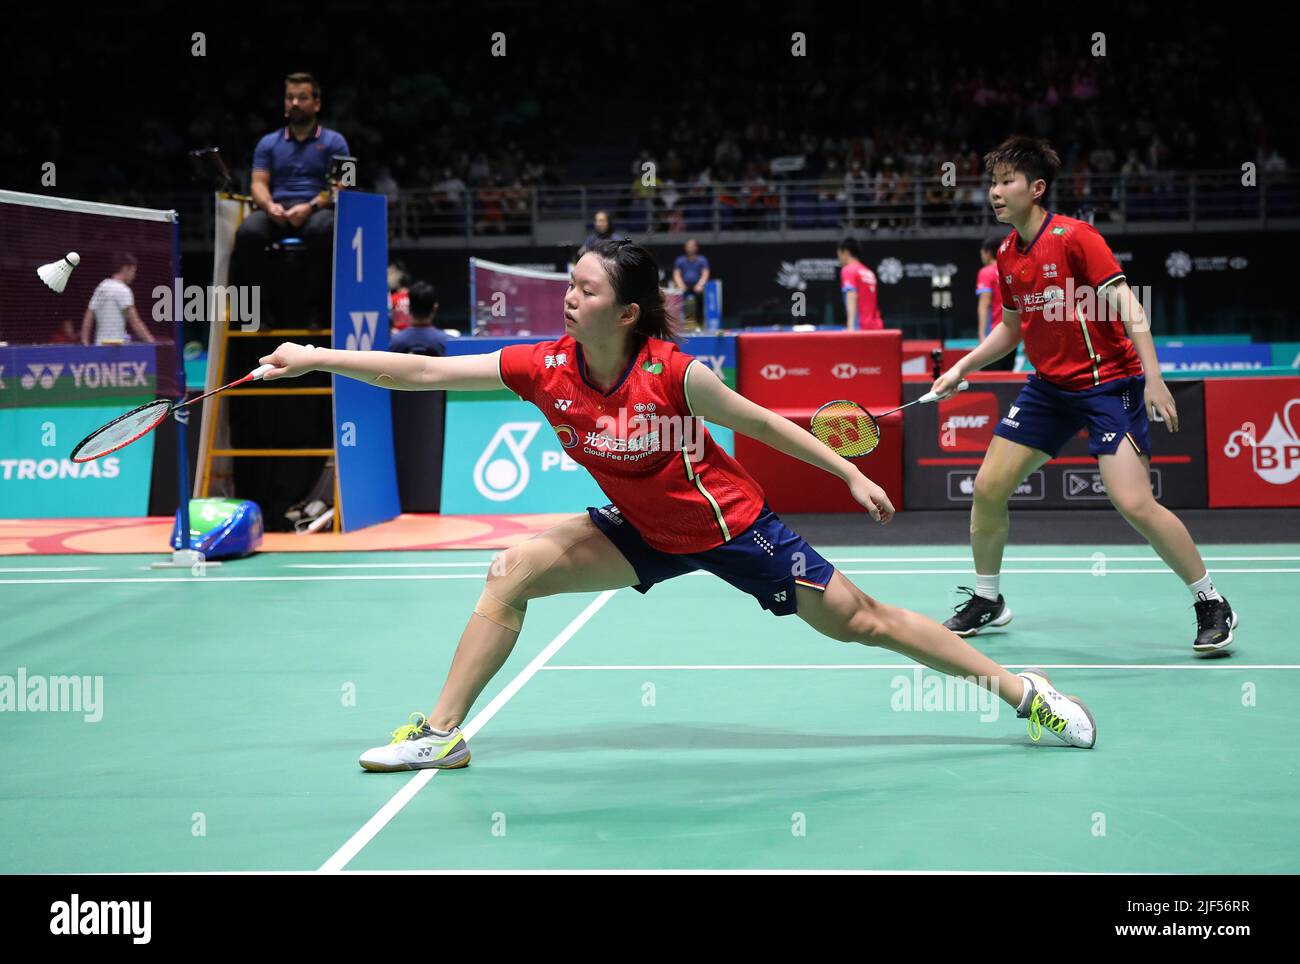 malaysian open badminton live